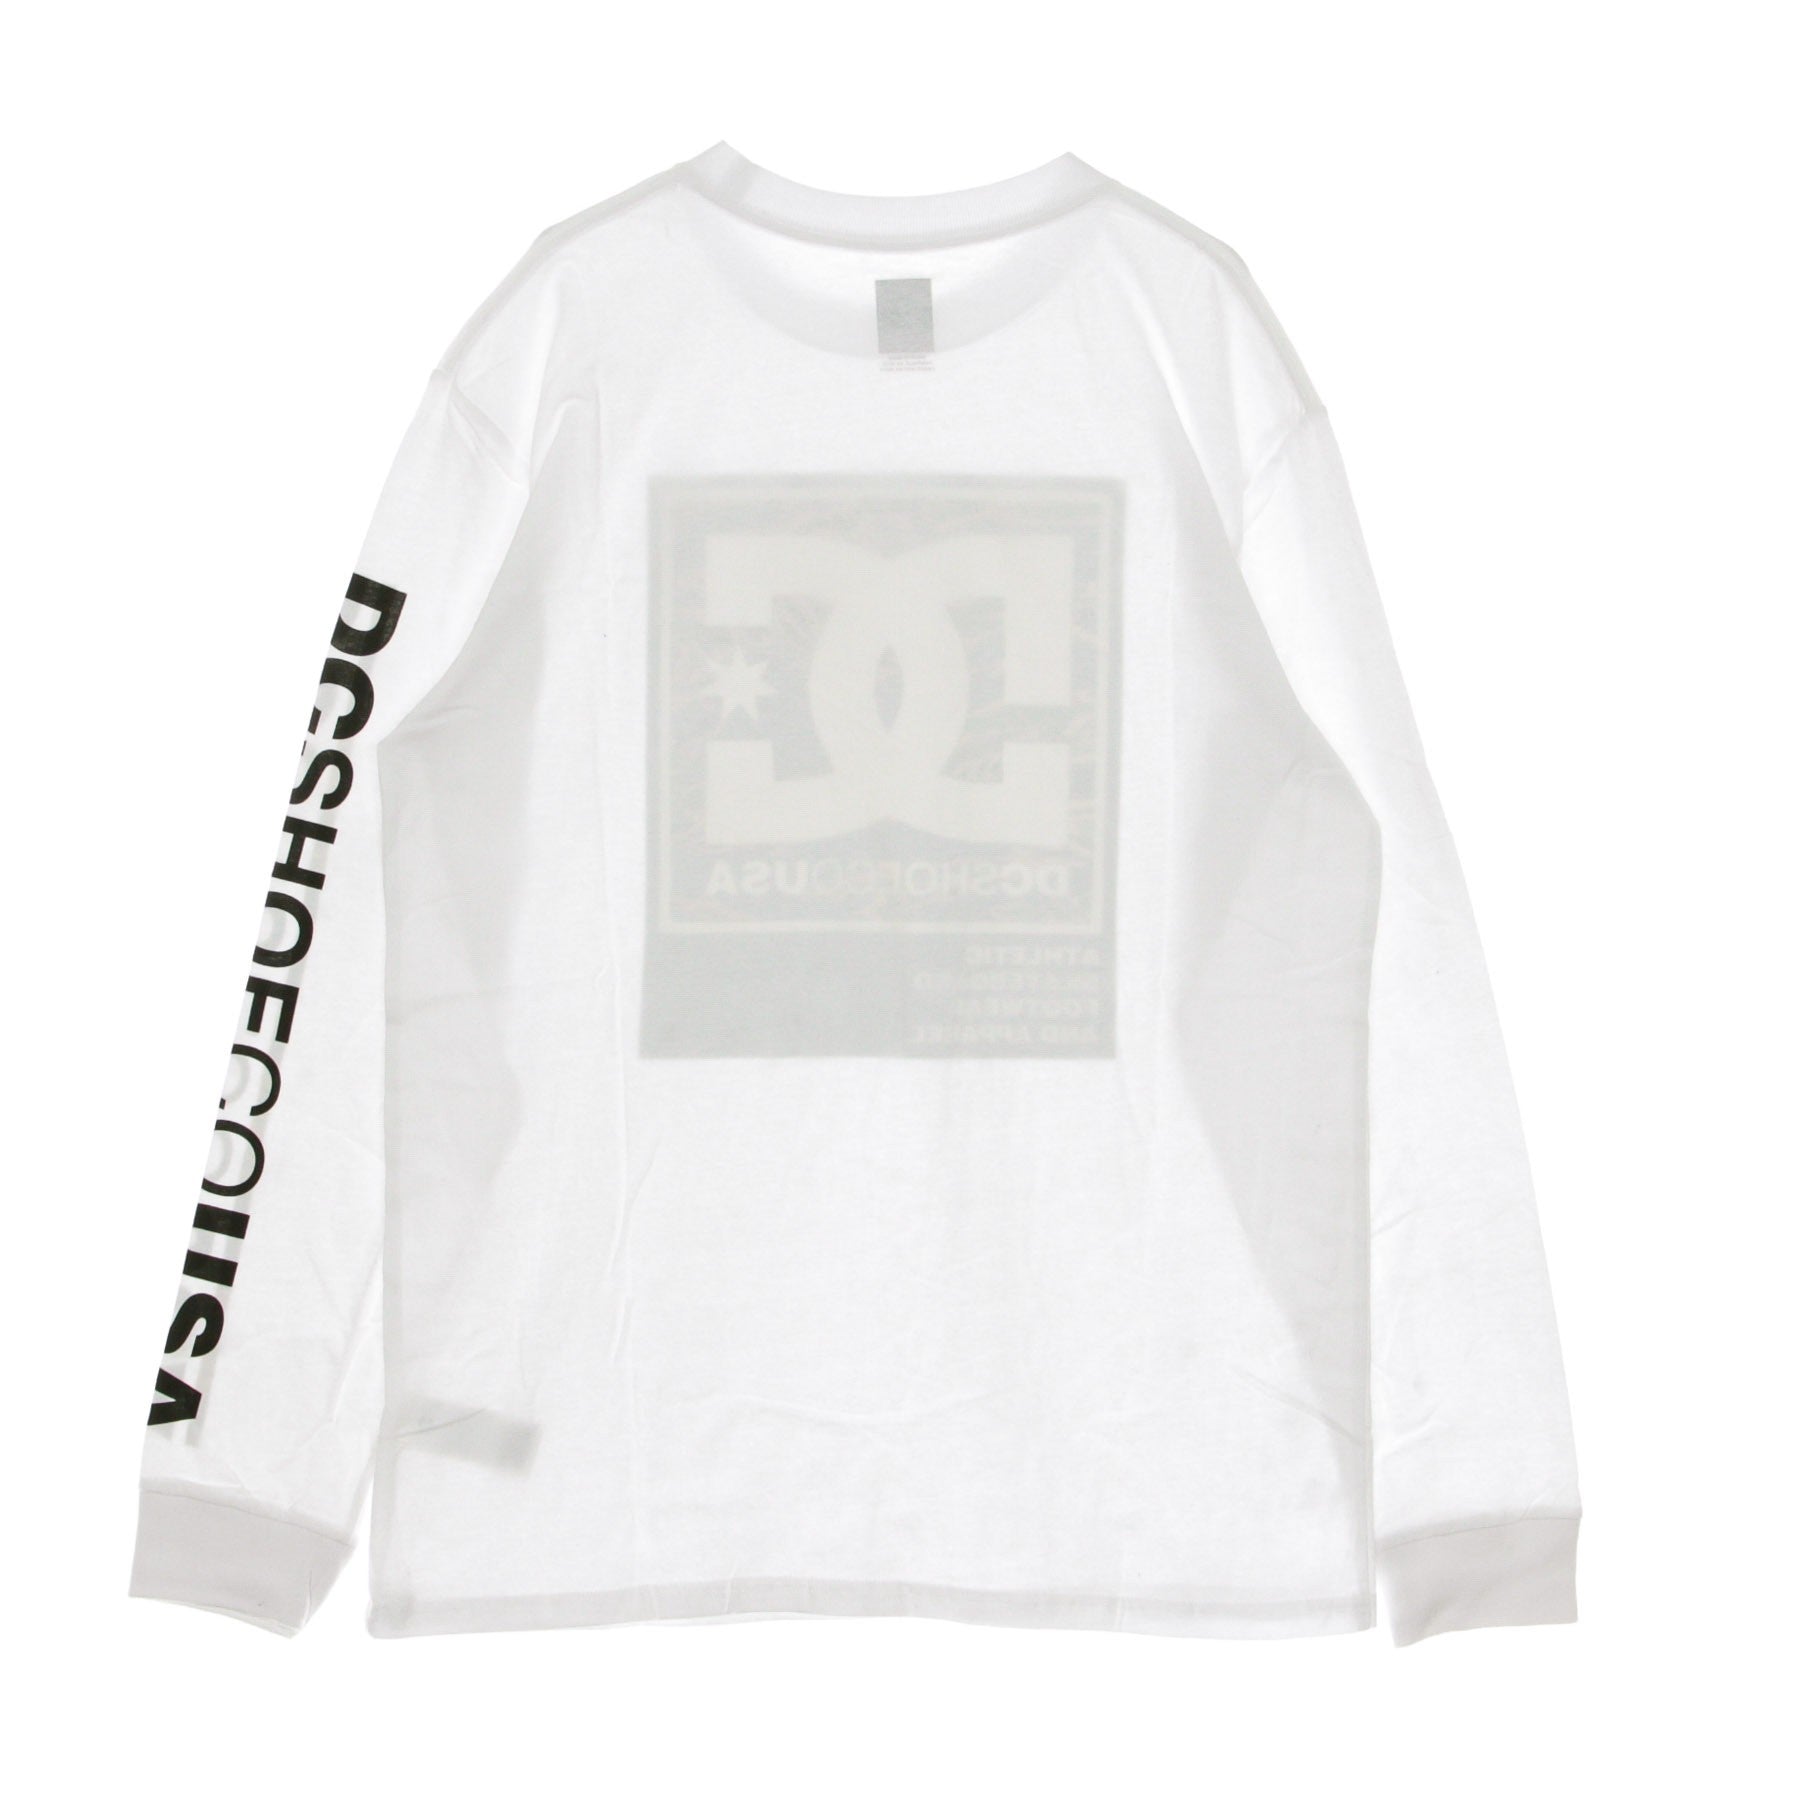 Arakana Men's Long Sleeve T-Shirt L/s White